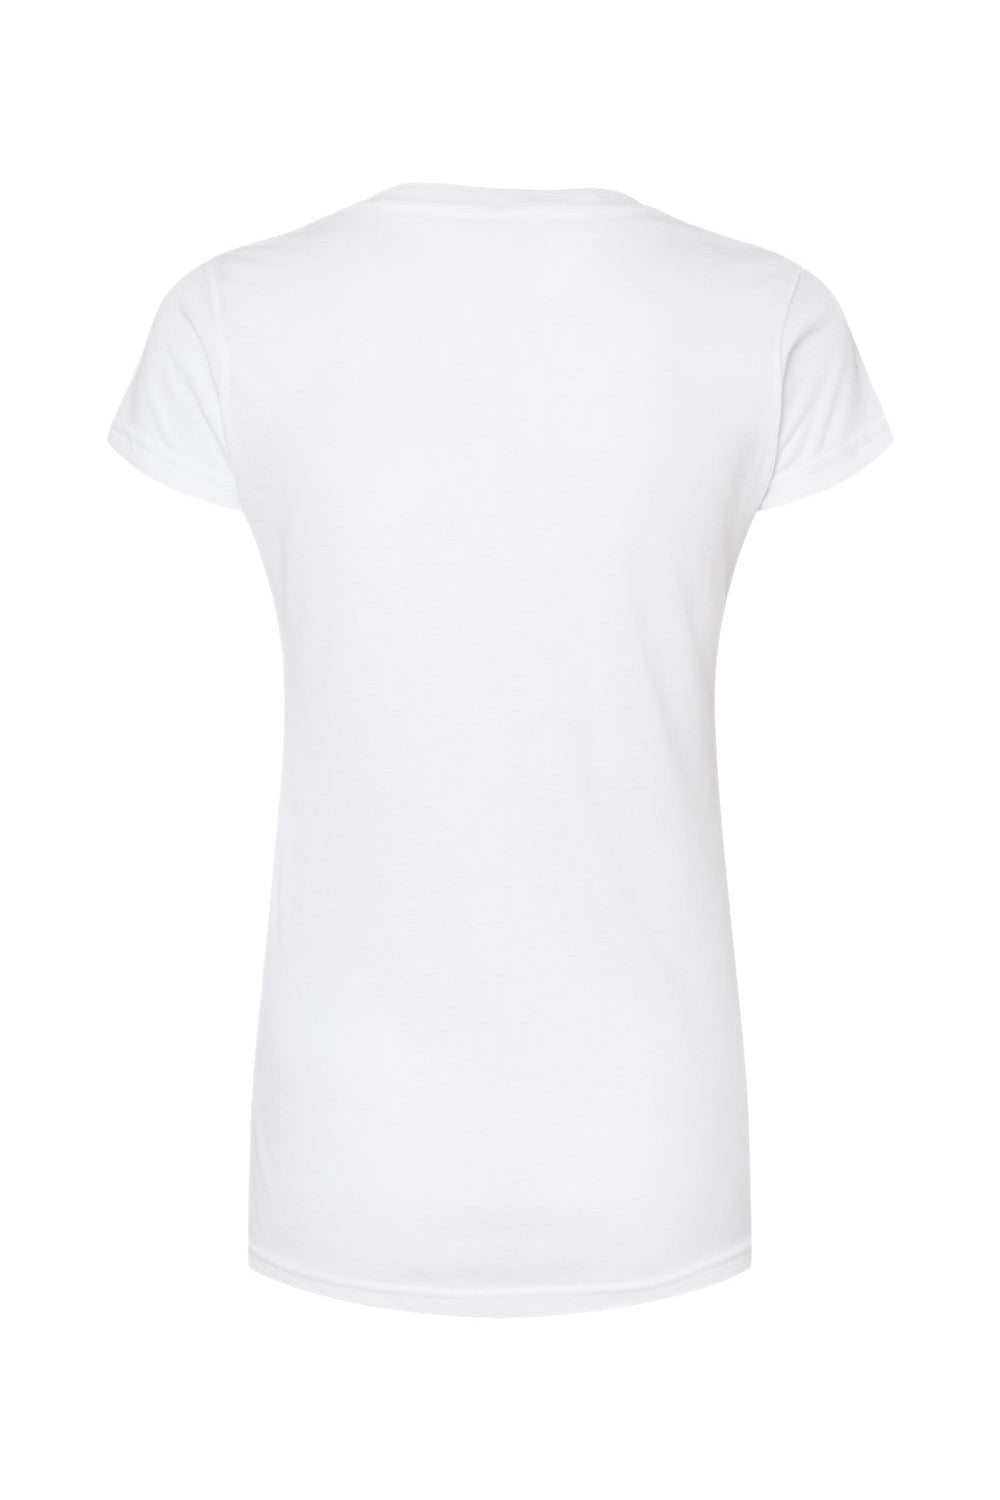 Tultex 244 Womens Poly-Rich Short Sleeve V-Neck T-Shirt White Flat Back